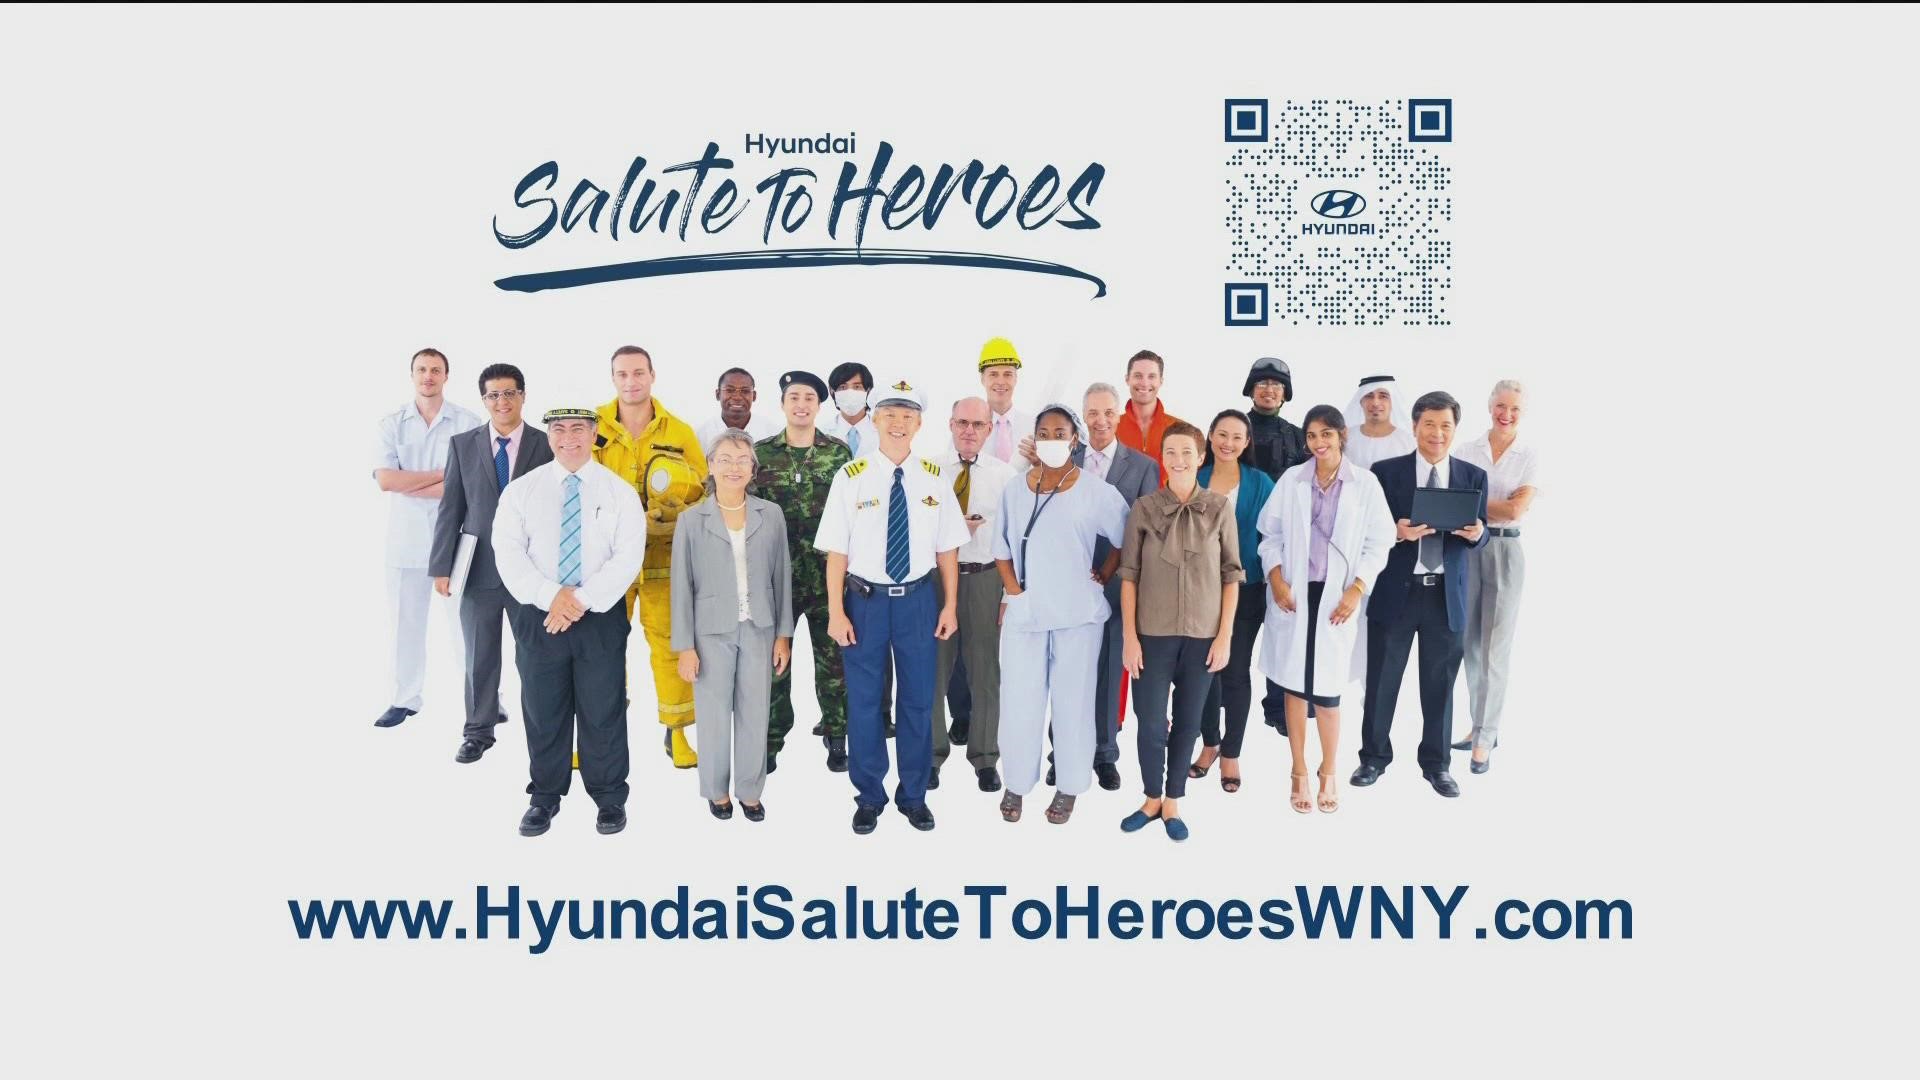 WNY Living - November 19 - Hyundai WNY Dealers Association (THIS VIDEO IS SPONSORED BY HYUNDAI WNY DEALERS ASSOCIATION)